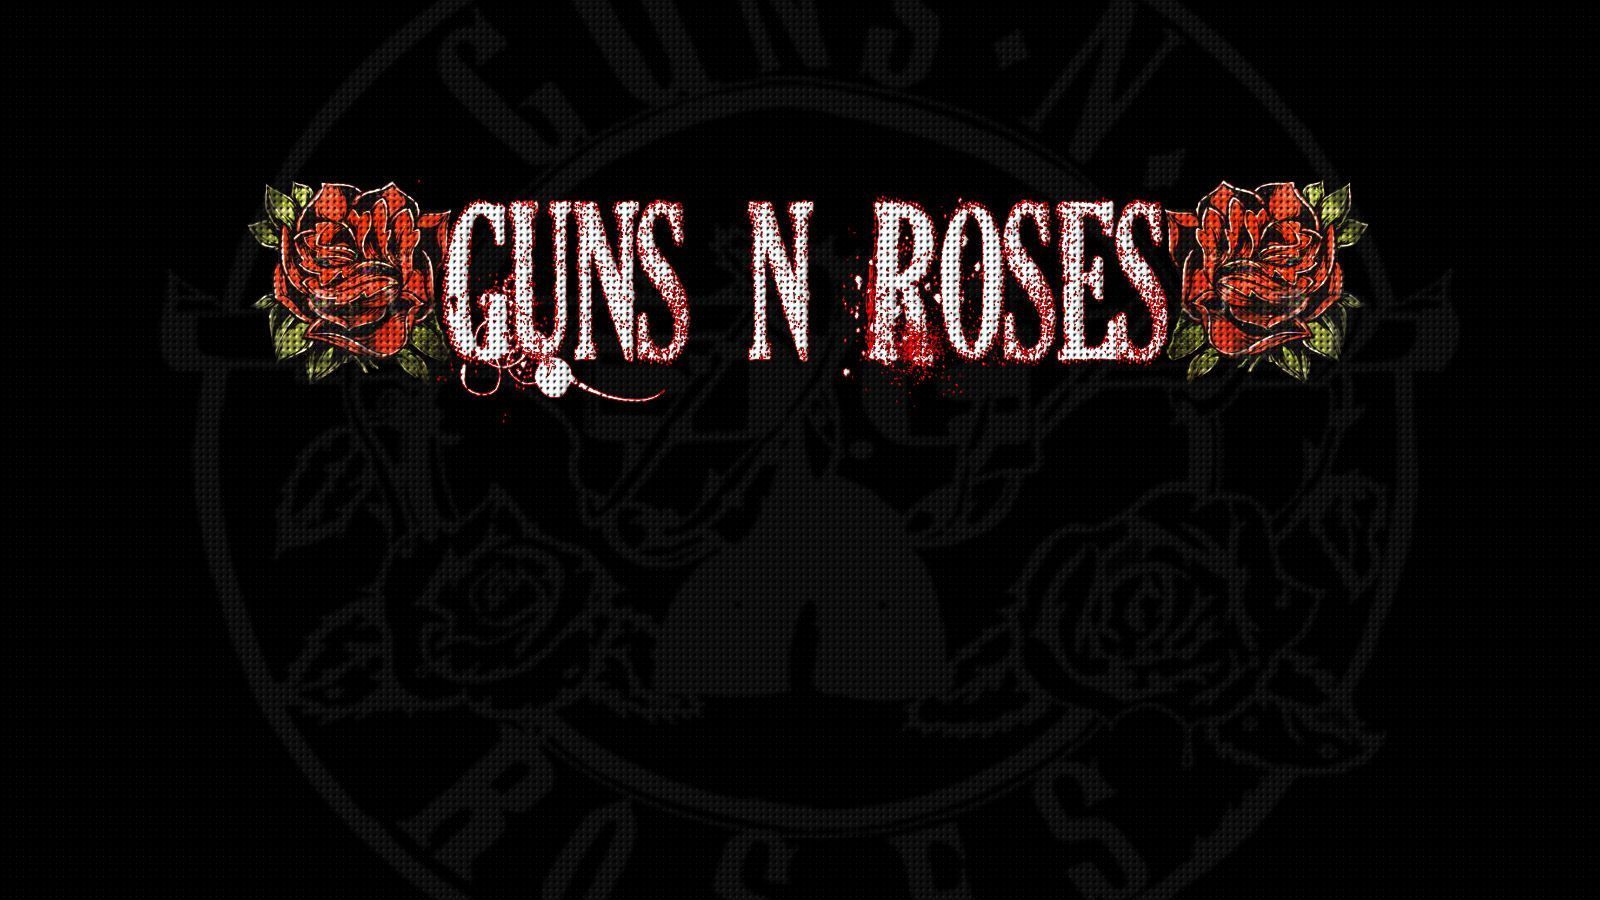 Guns N Roses heavy metal hard rock bands groups album cover logo